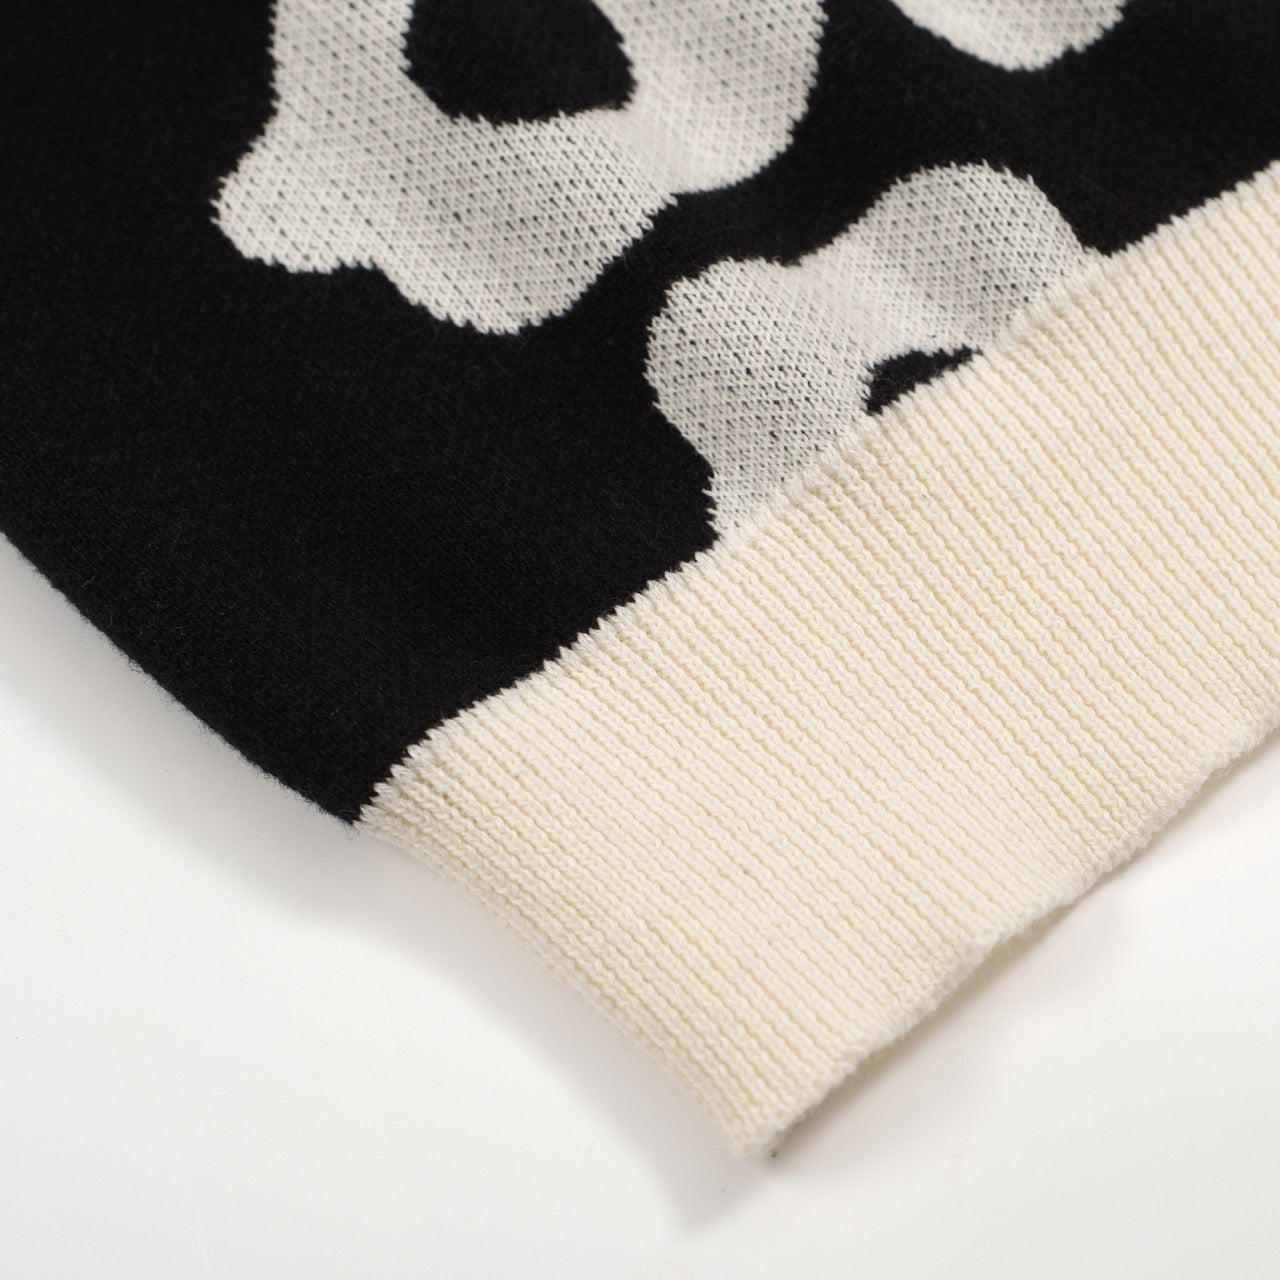 Men's Black And White Jacquard Design Knitted Short Sleeve Polo Shirt